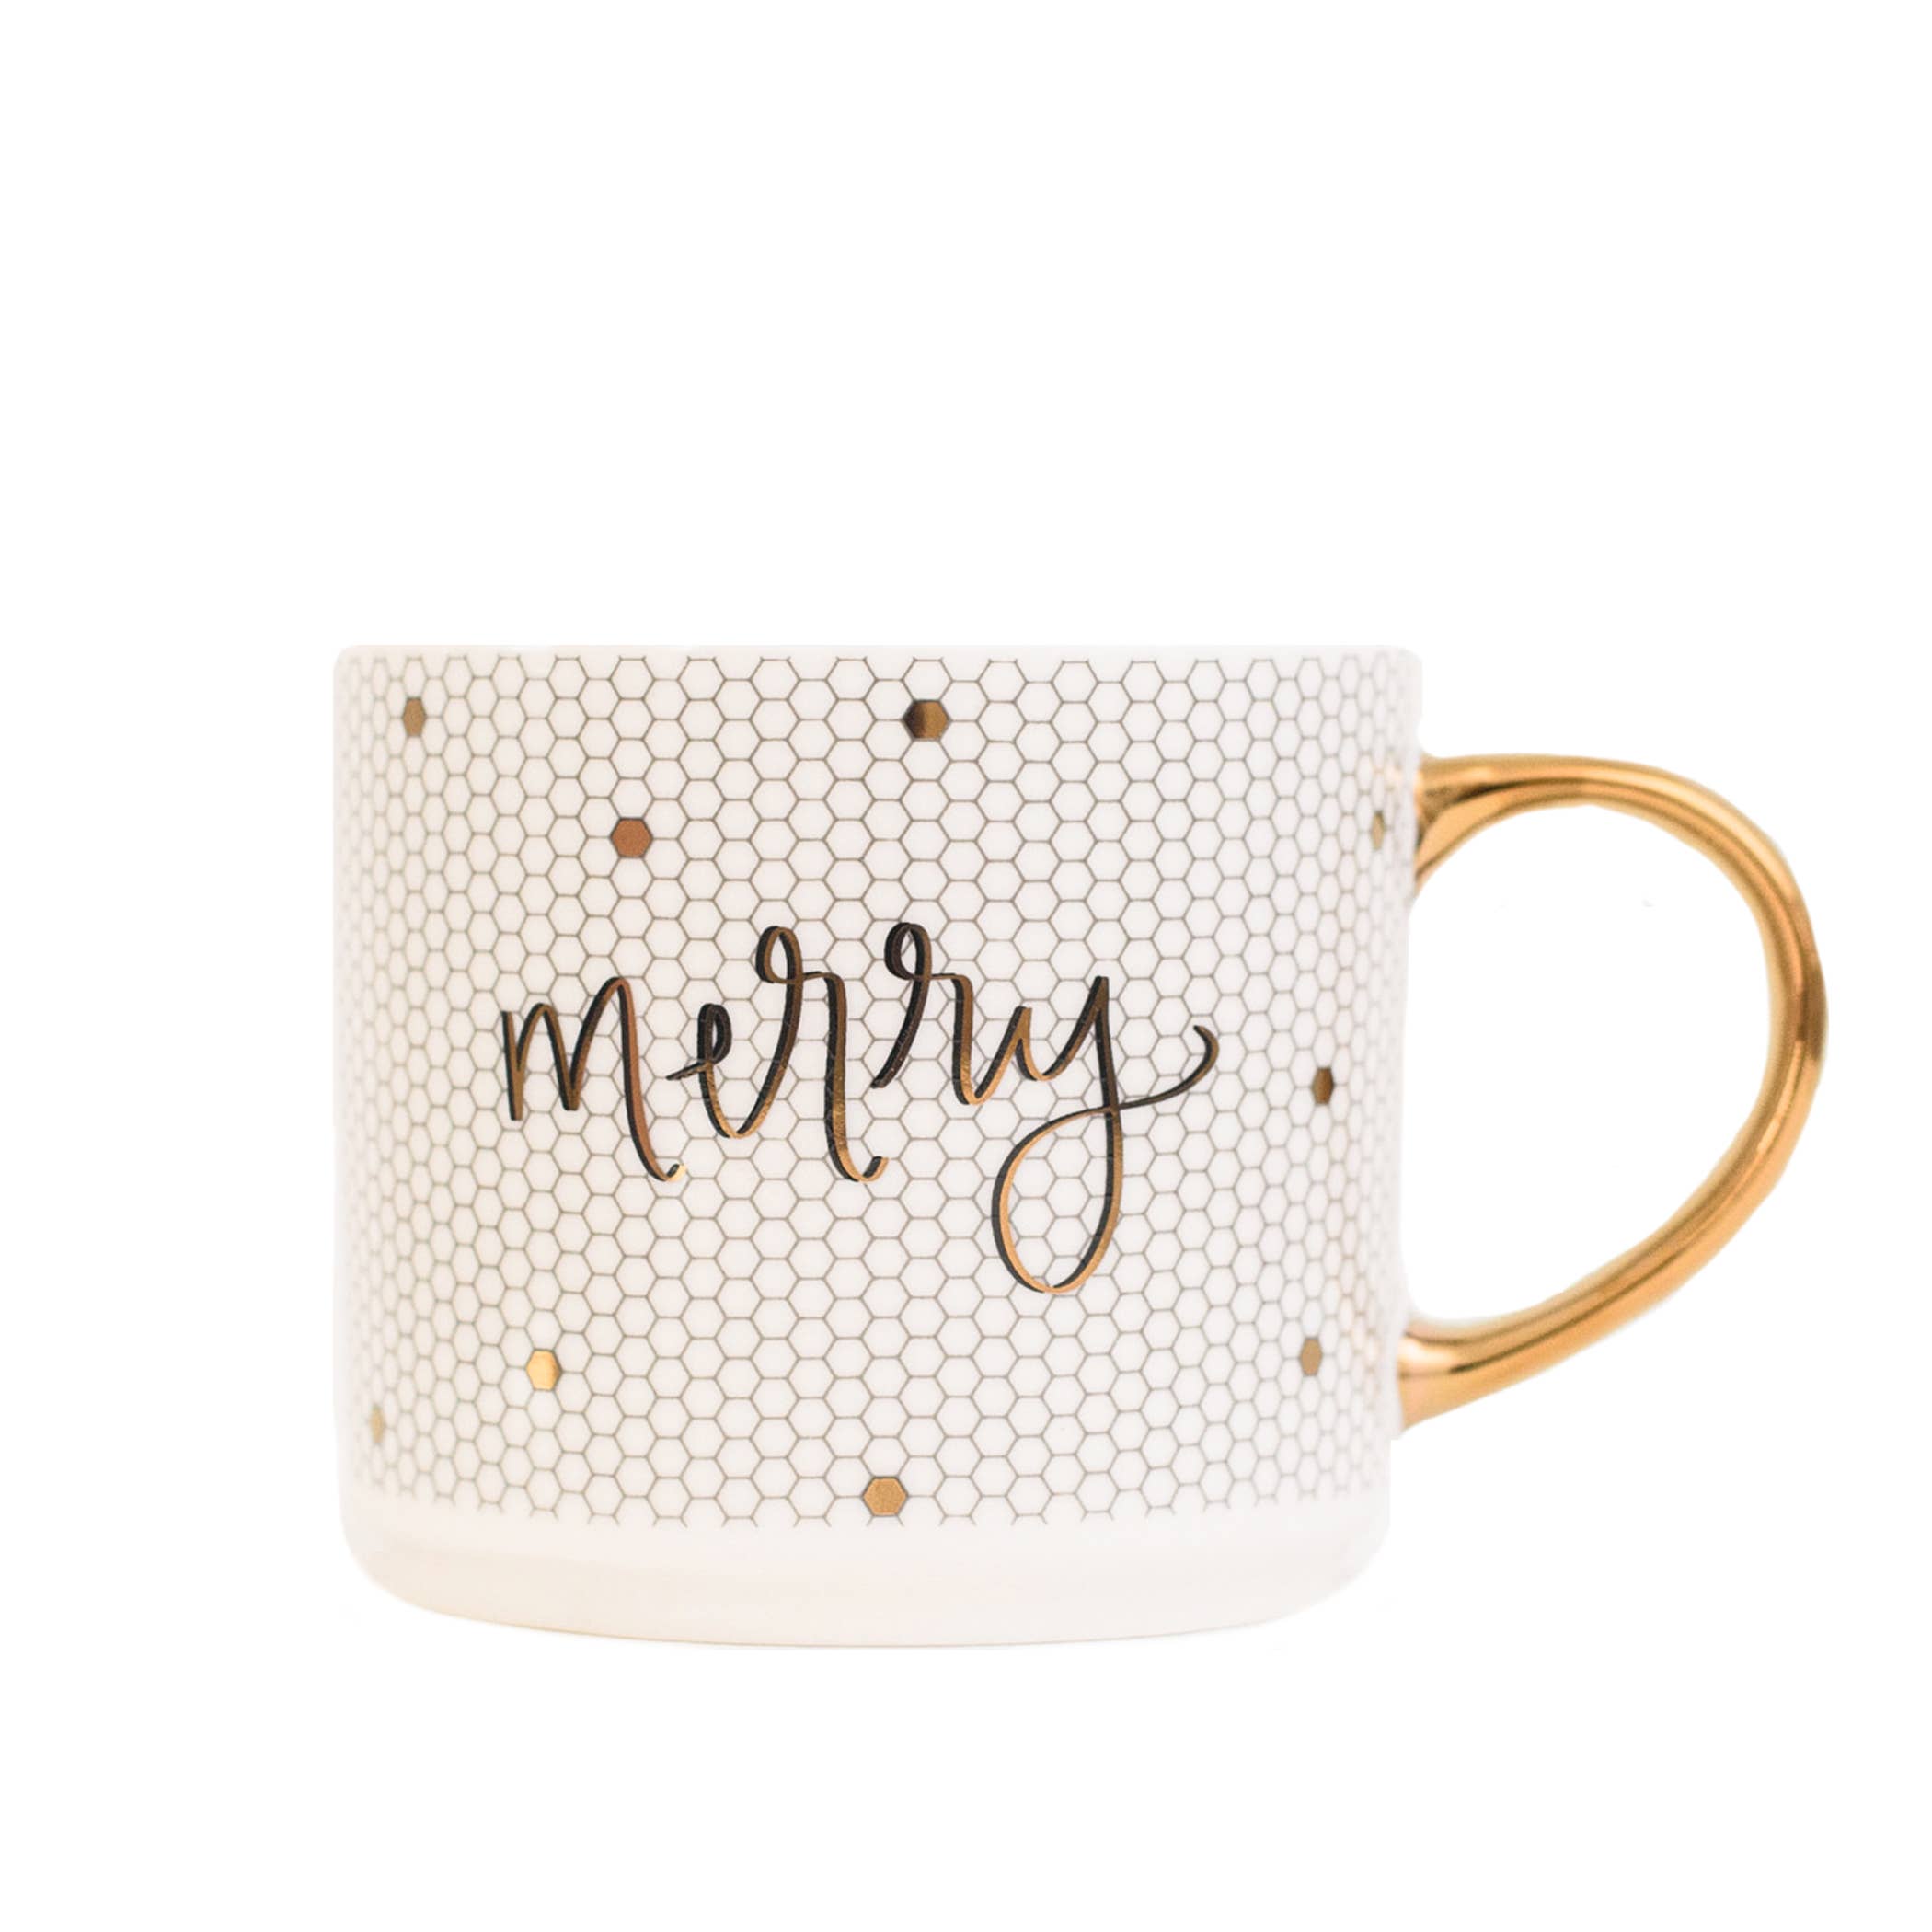 Merry - Gold, White Tile Hand Lettered Coffee Mug - 17 oz